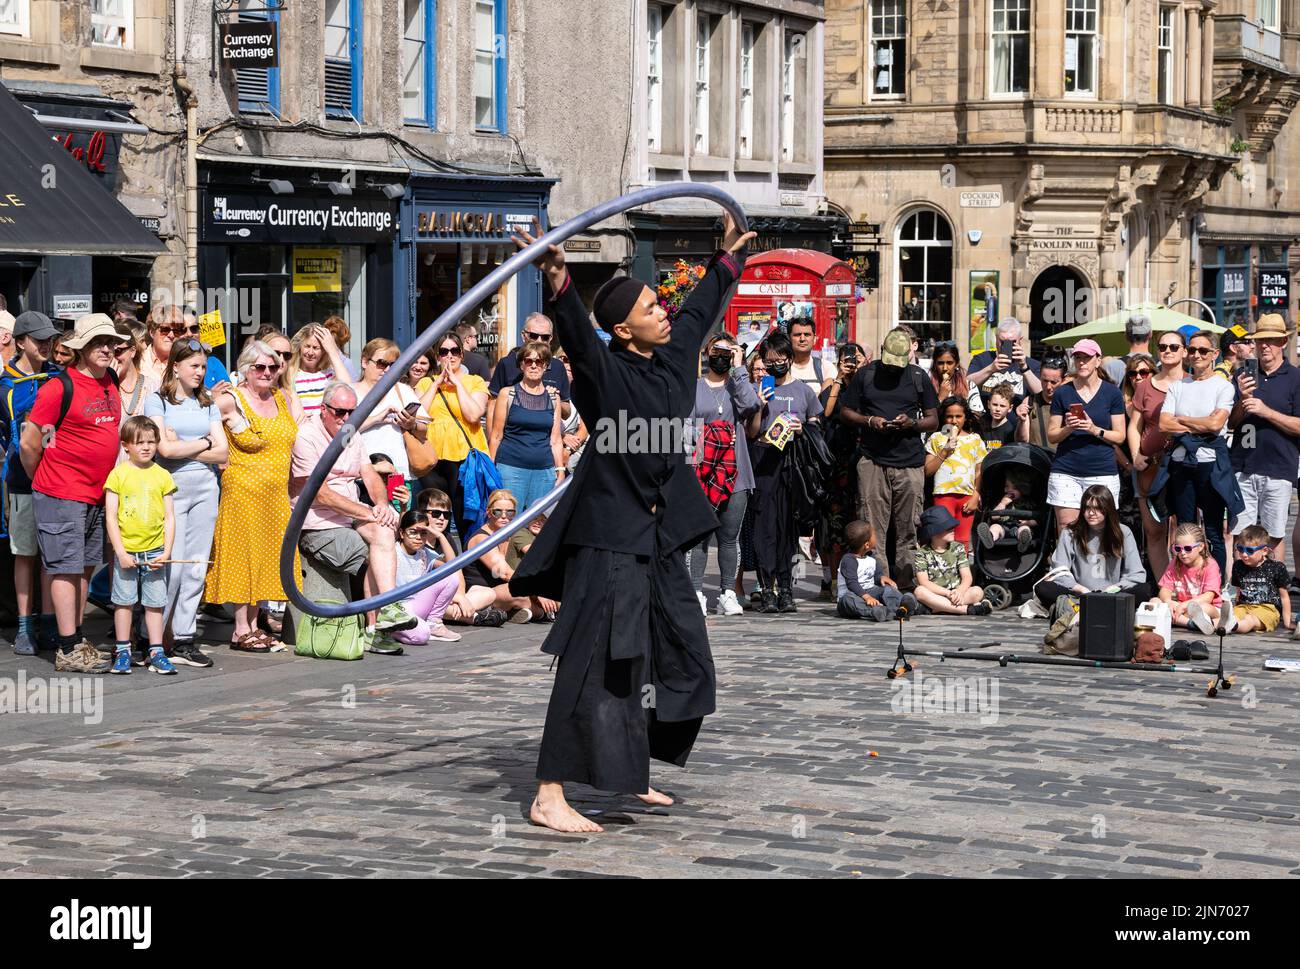 Royal Mile, Edinburgh, Scotland, UK, 9th August 2022. Edinburgh Festival Fringe street performer: a man performs acrobatci stunts for the crowd in the sunshine. Credit: Sally Anderson/Alamy Live News Stock Photo